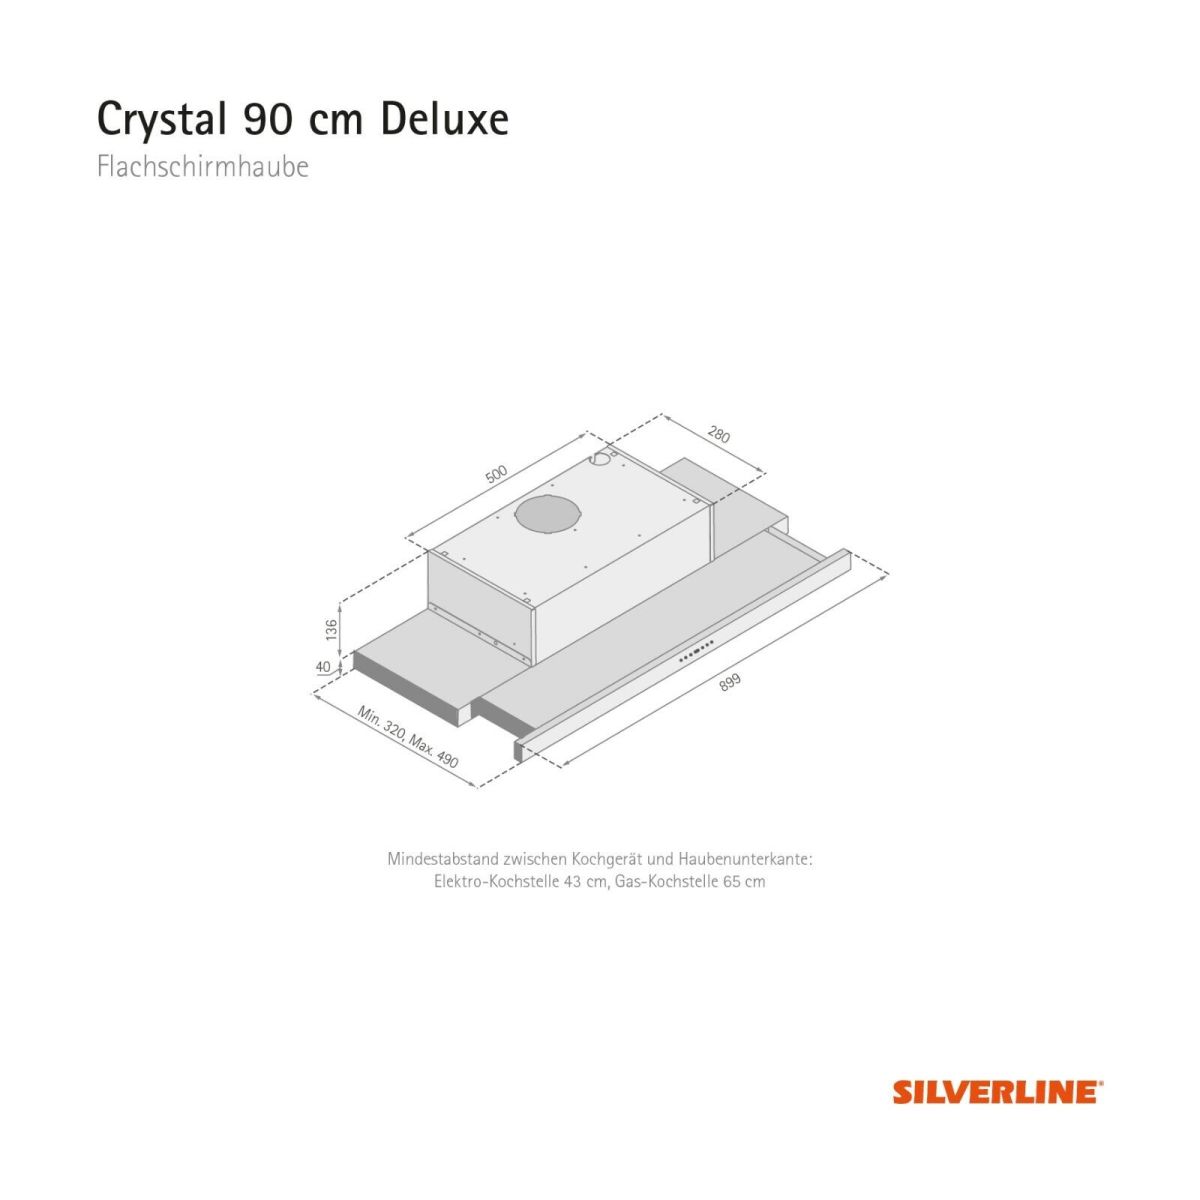 Silverline CRF 910 E Crystal Deluxe 90cm Flachschirmhaube  EEK:D